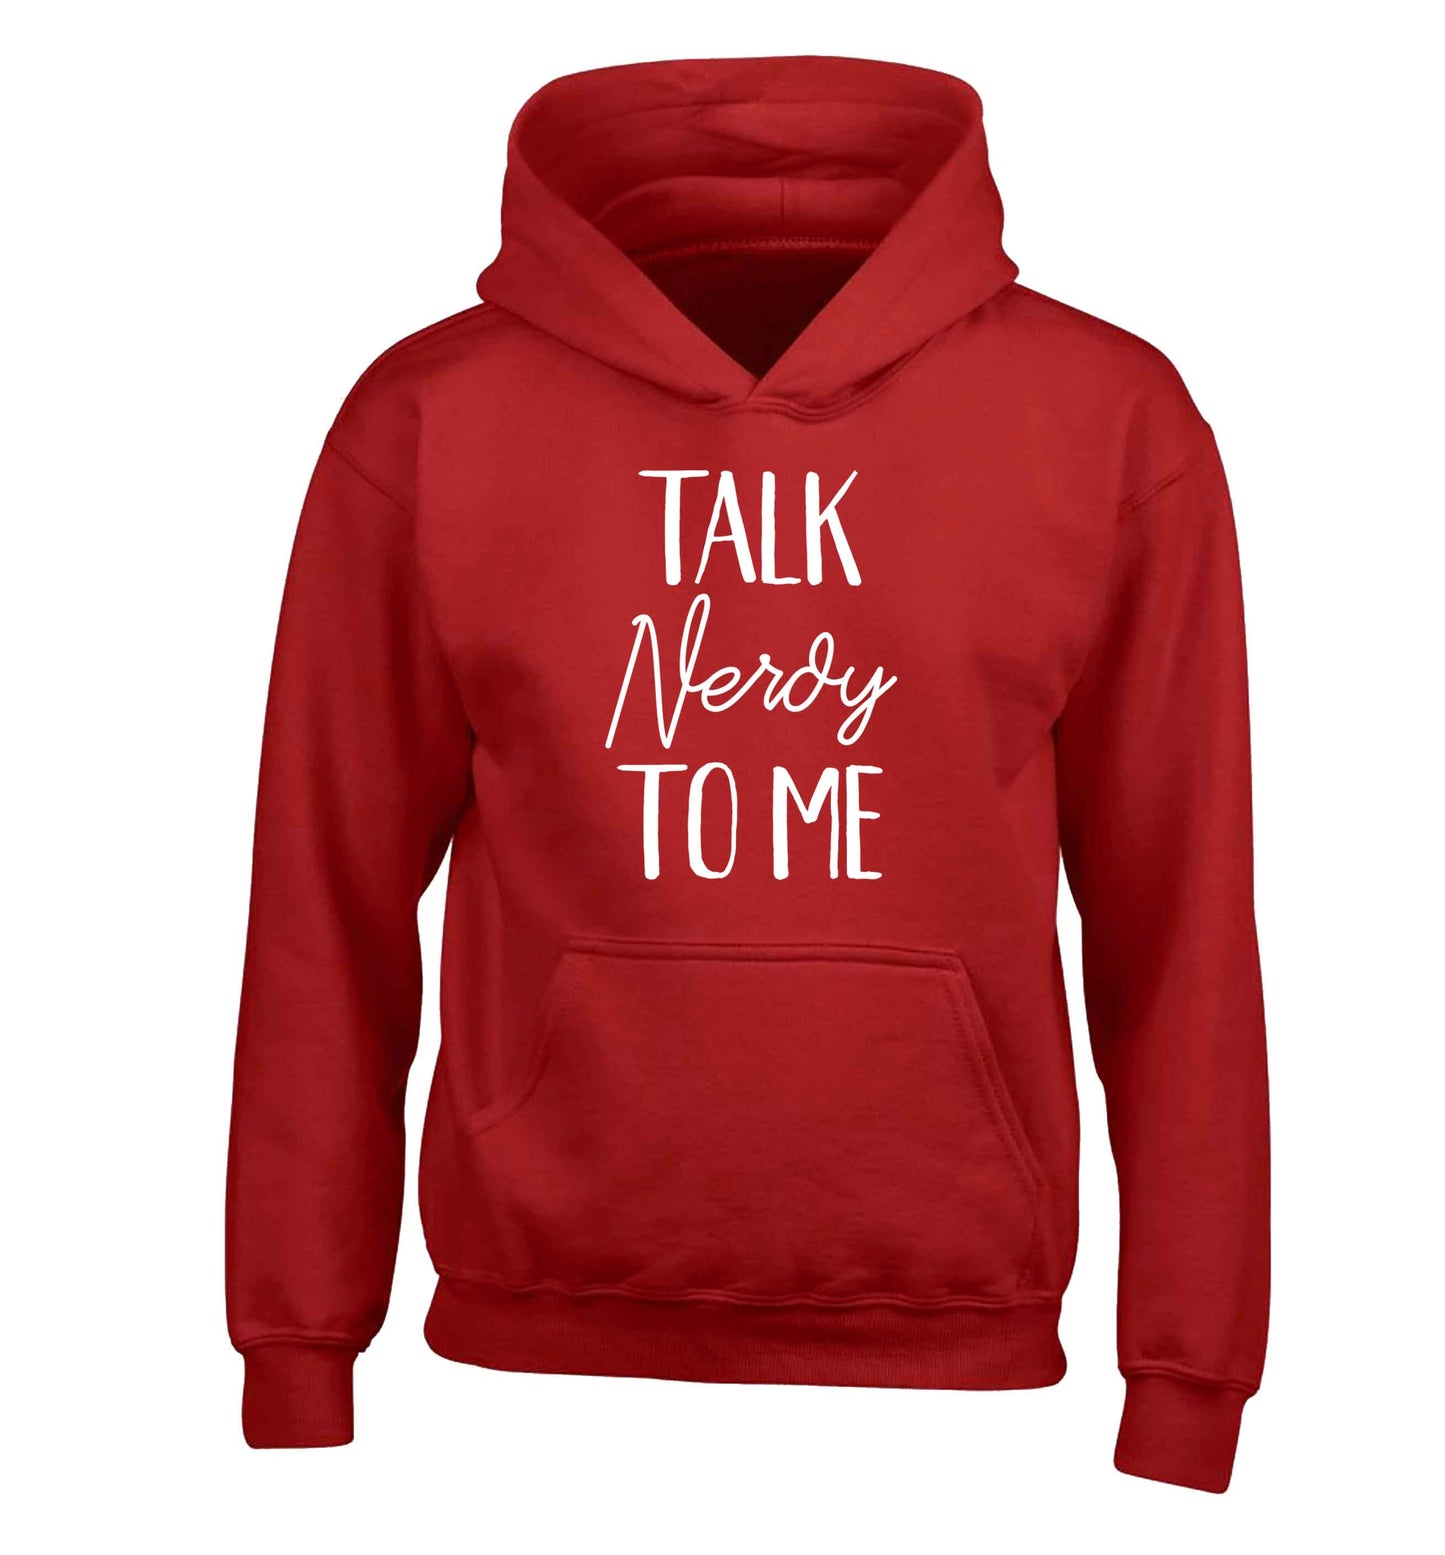 Talk nerdy to me children's red hoodie 12-13 Years